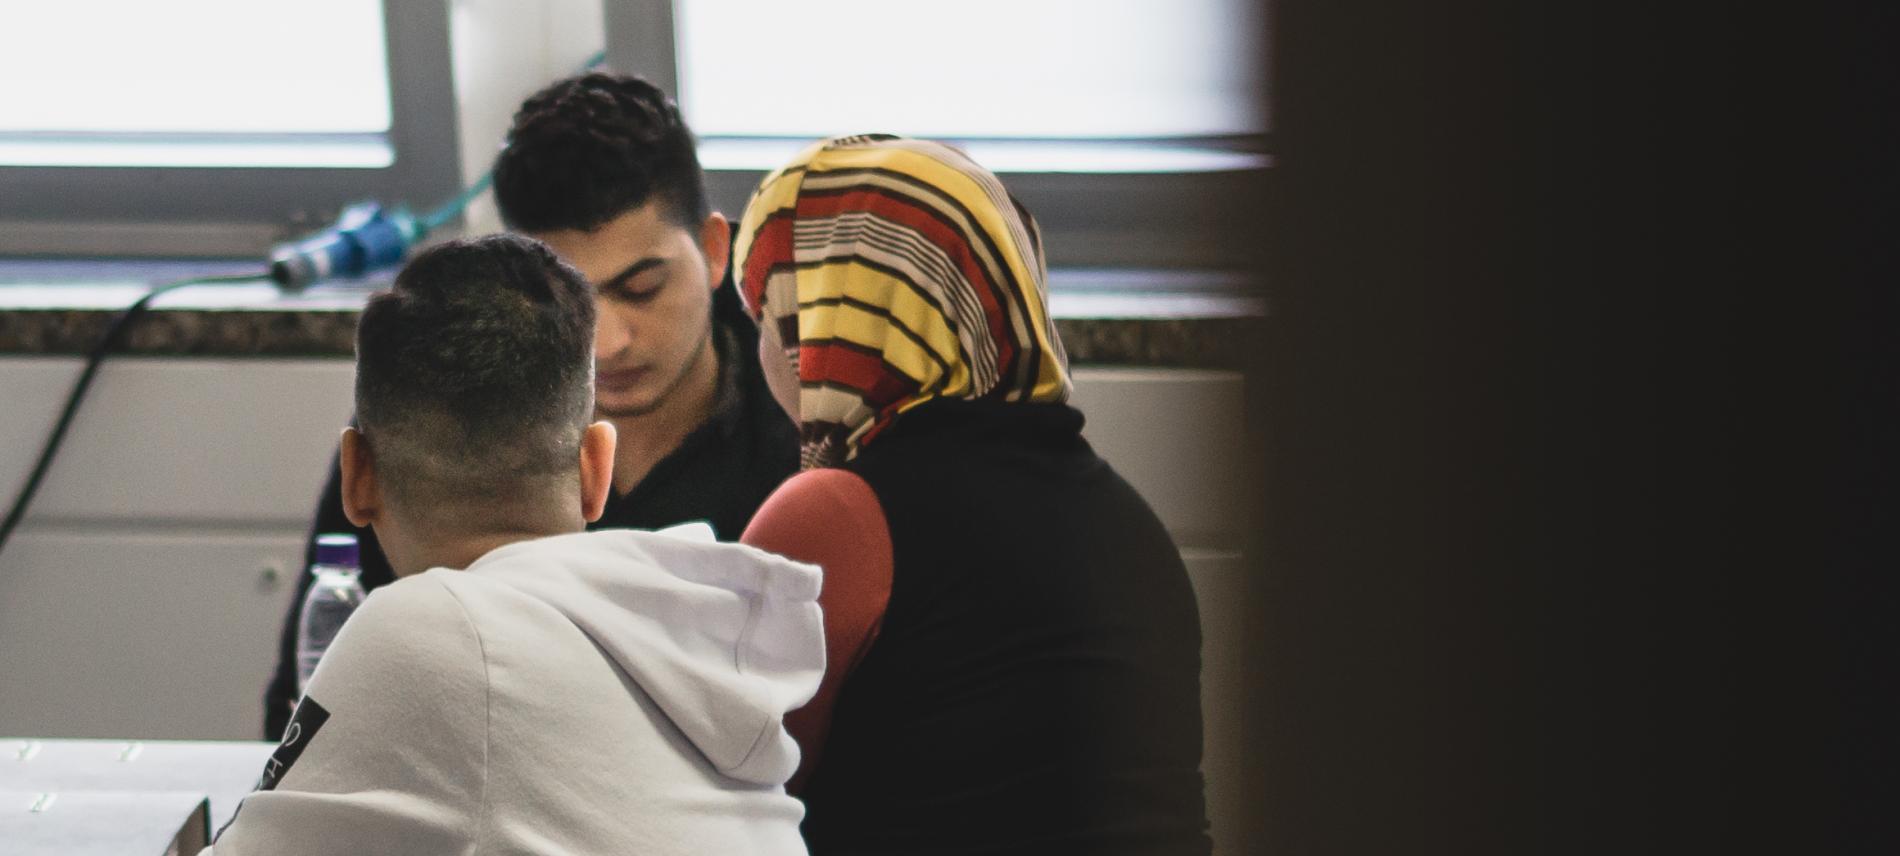 Ärzte der Welt bietet in den Münchner Flüchtlingsunterkünften psychosoziale Unterstützung an. Foto: David Gohlke